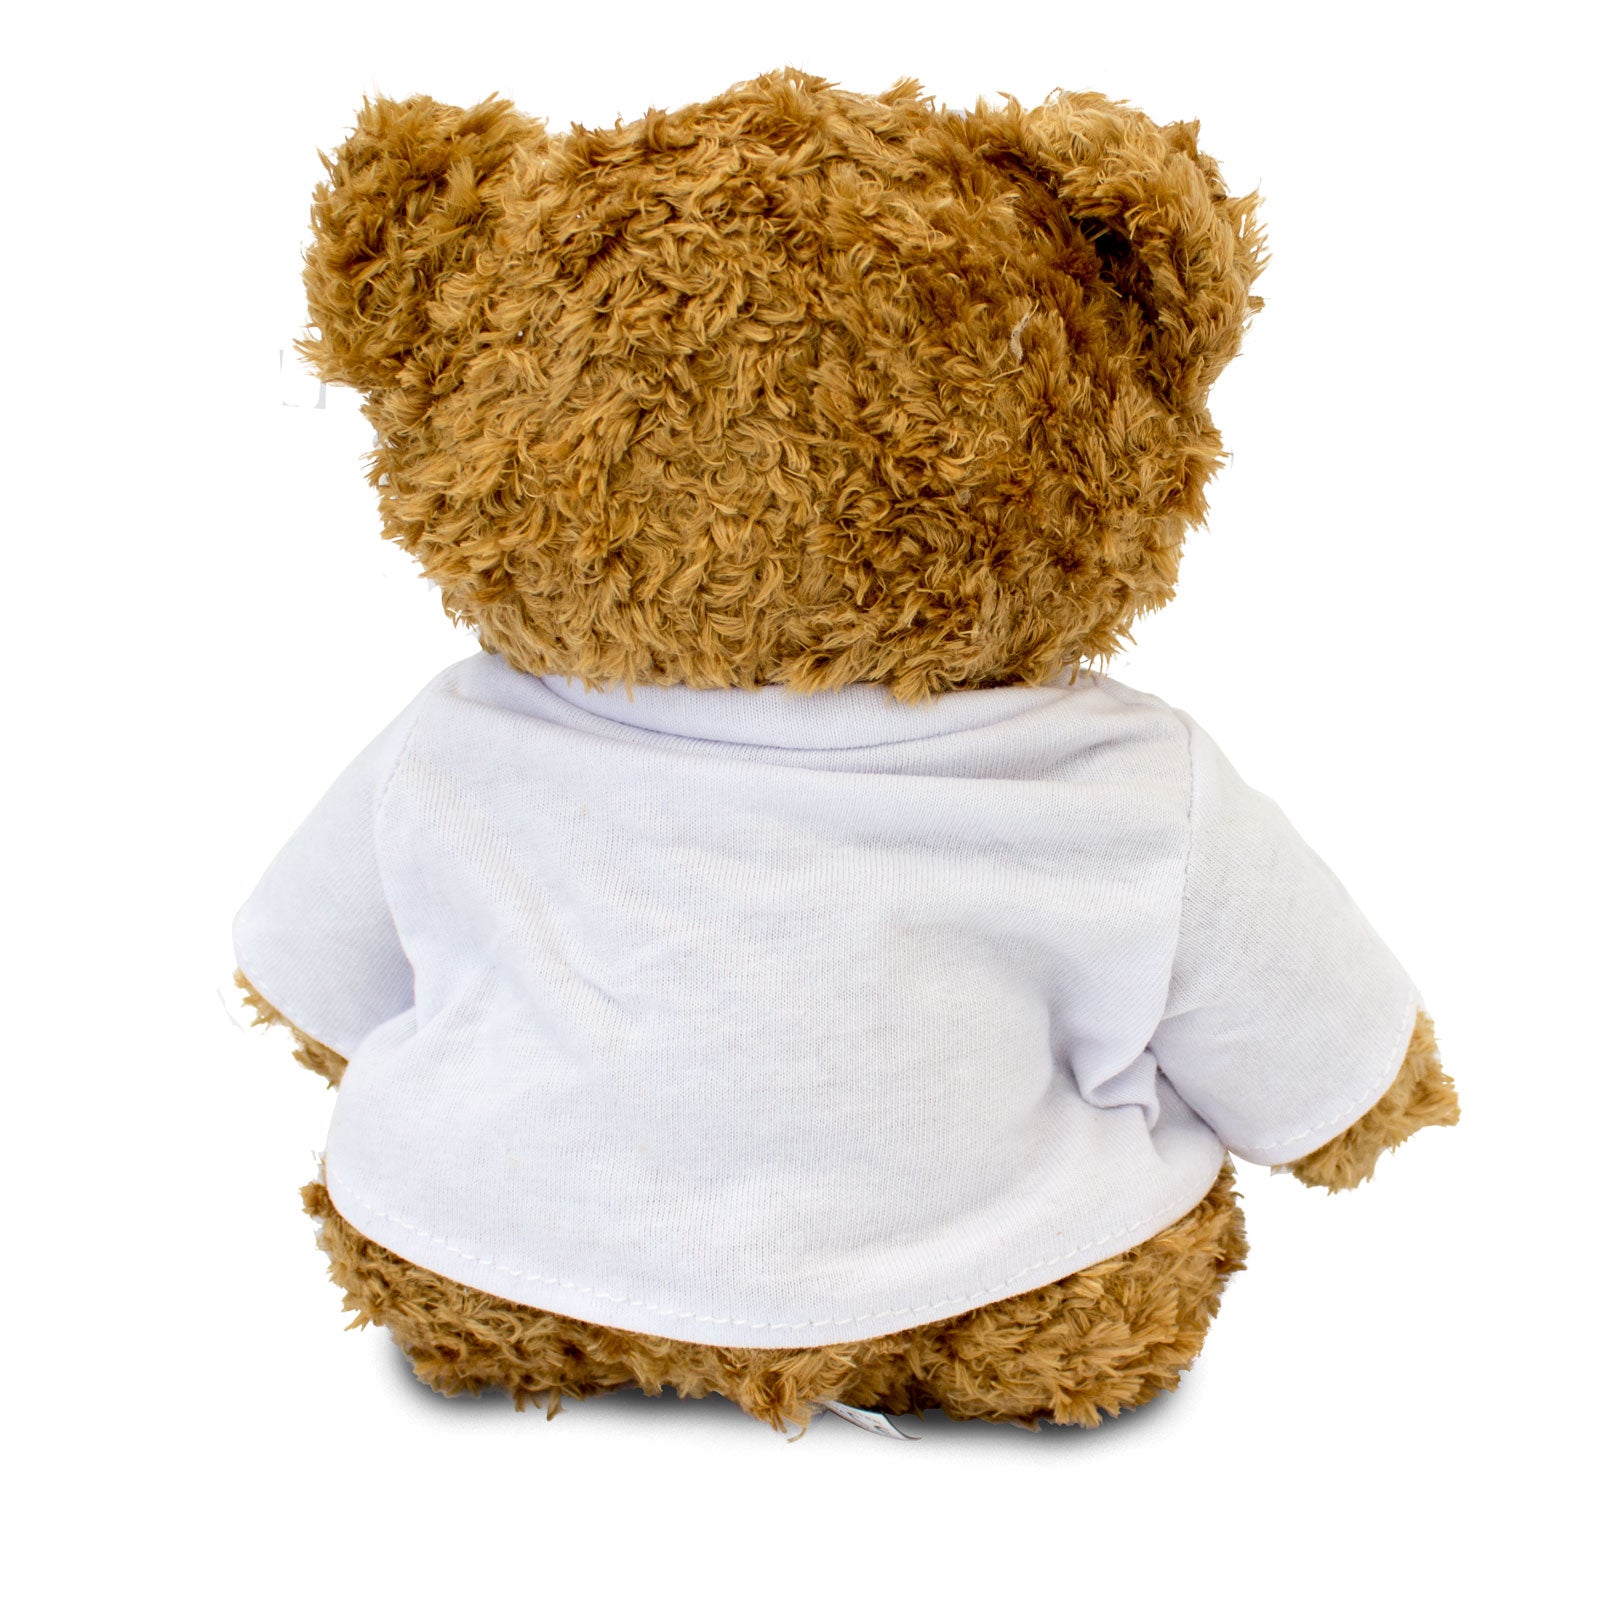 Get Well Soon Fabian - Teddy Bear